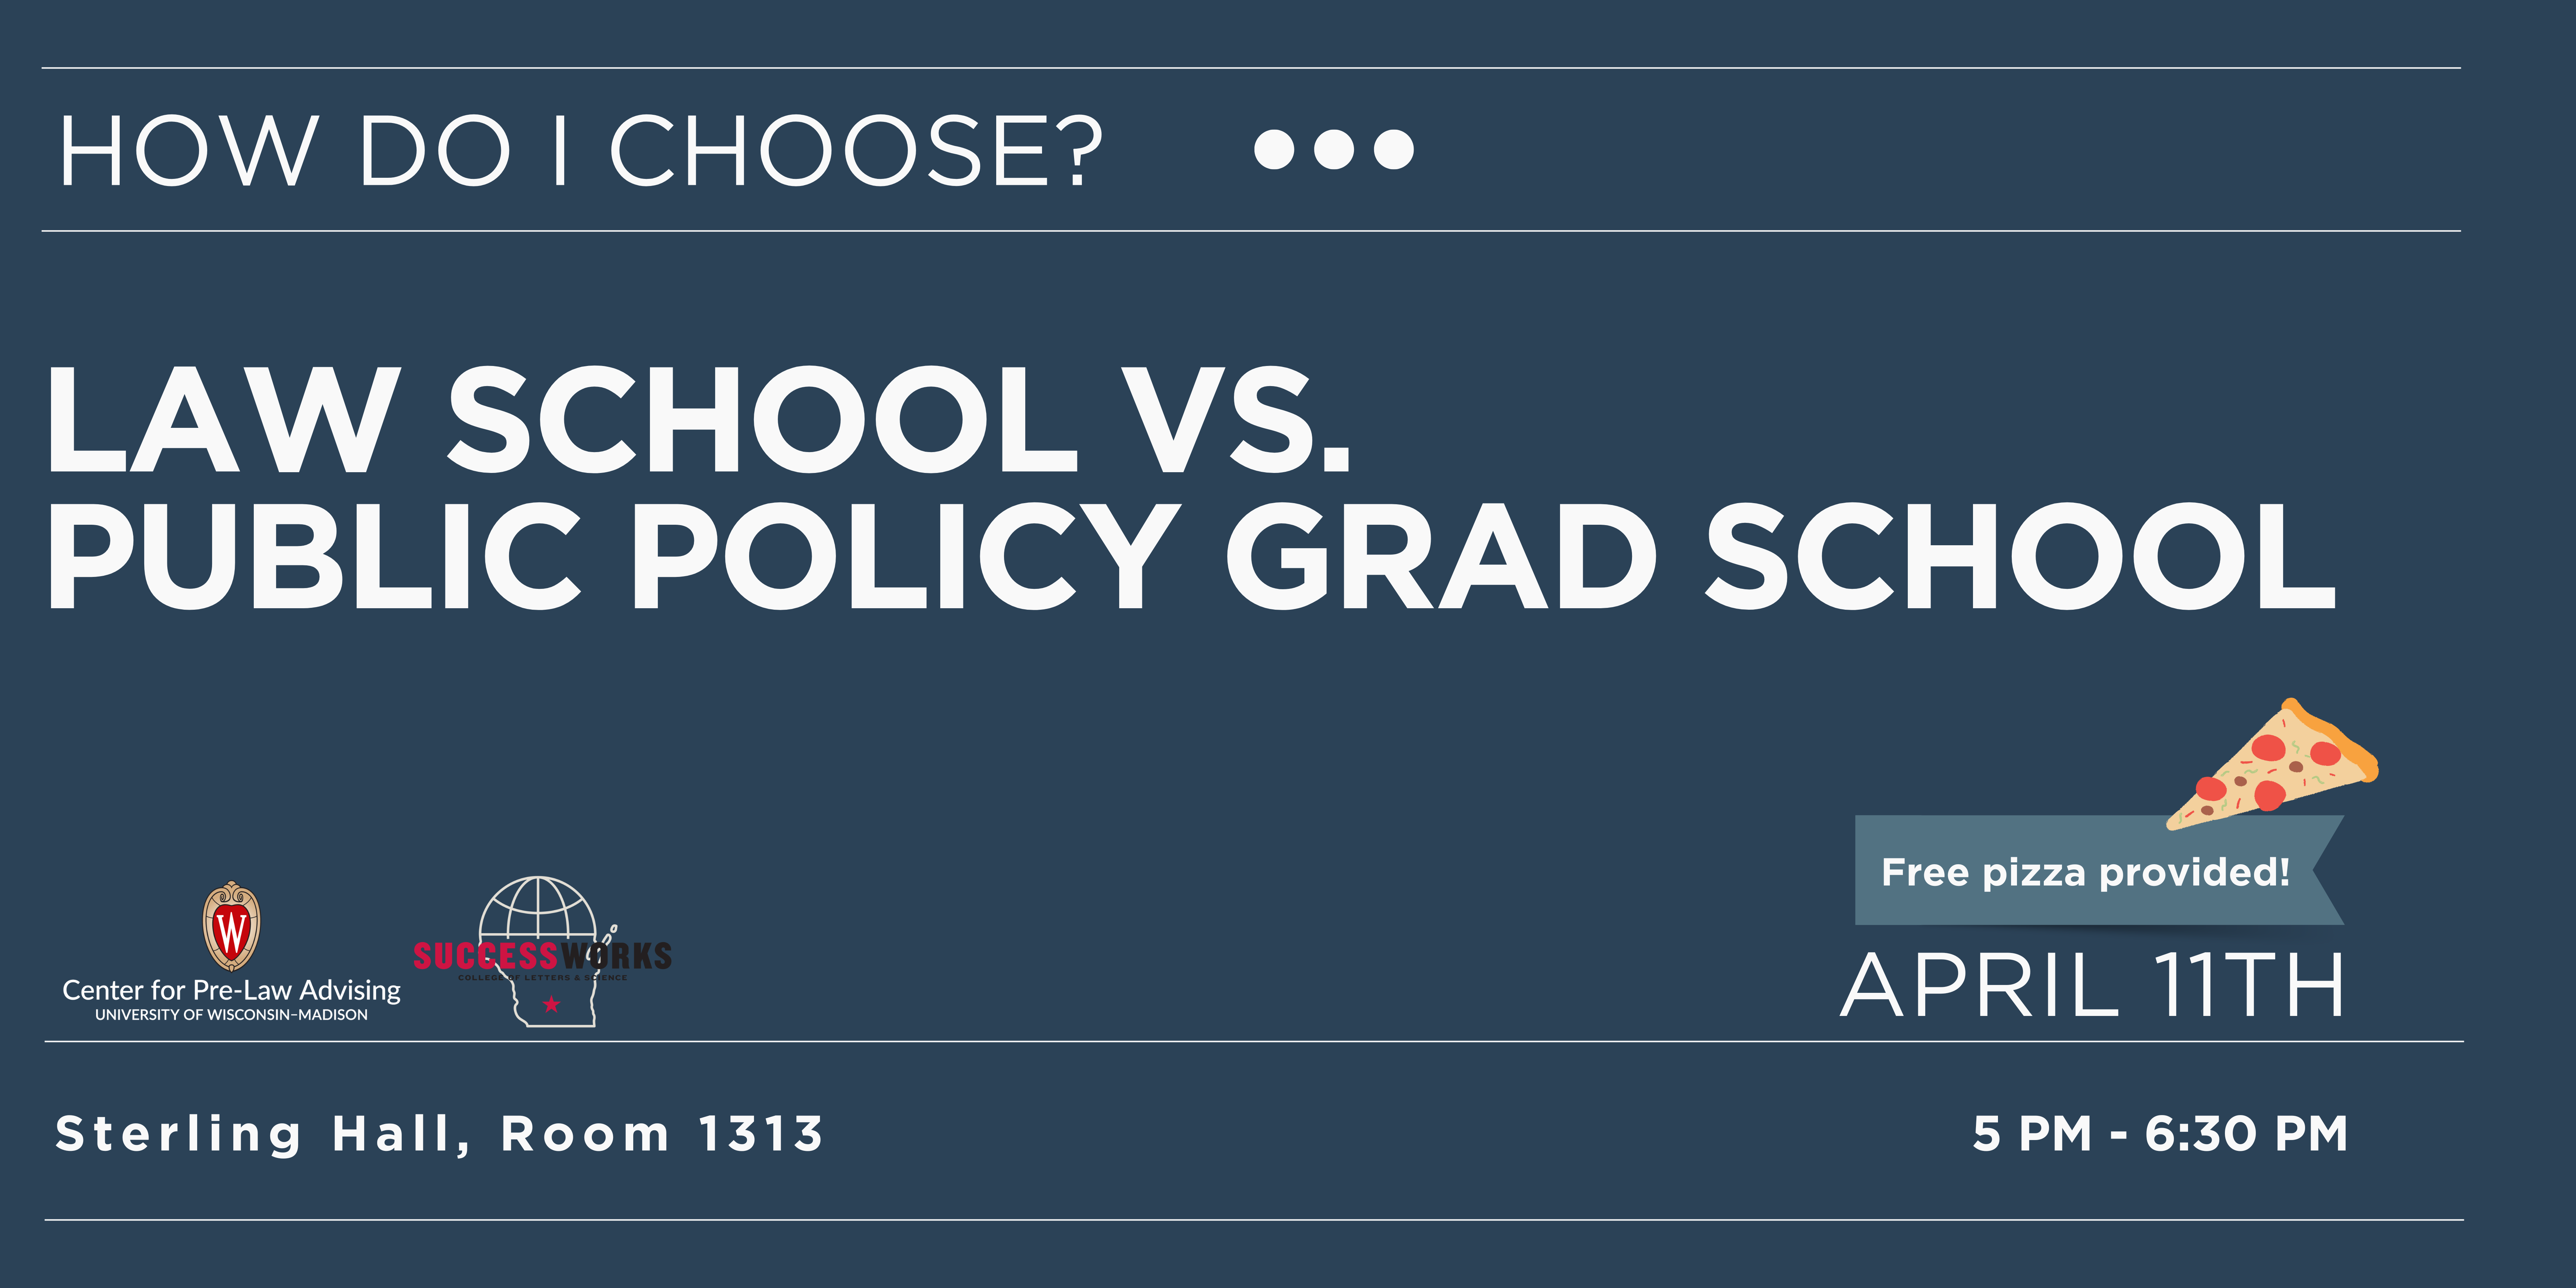 Blue banner which says "How Do I Choose? Law School vs. Public Policy Grad School"